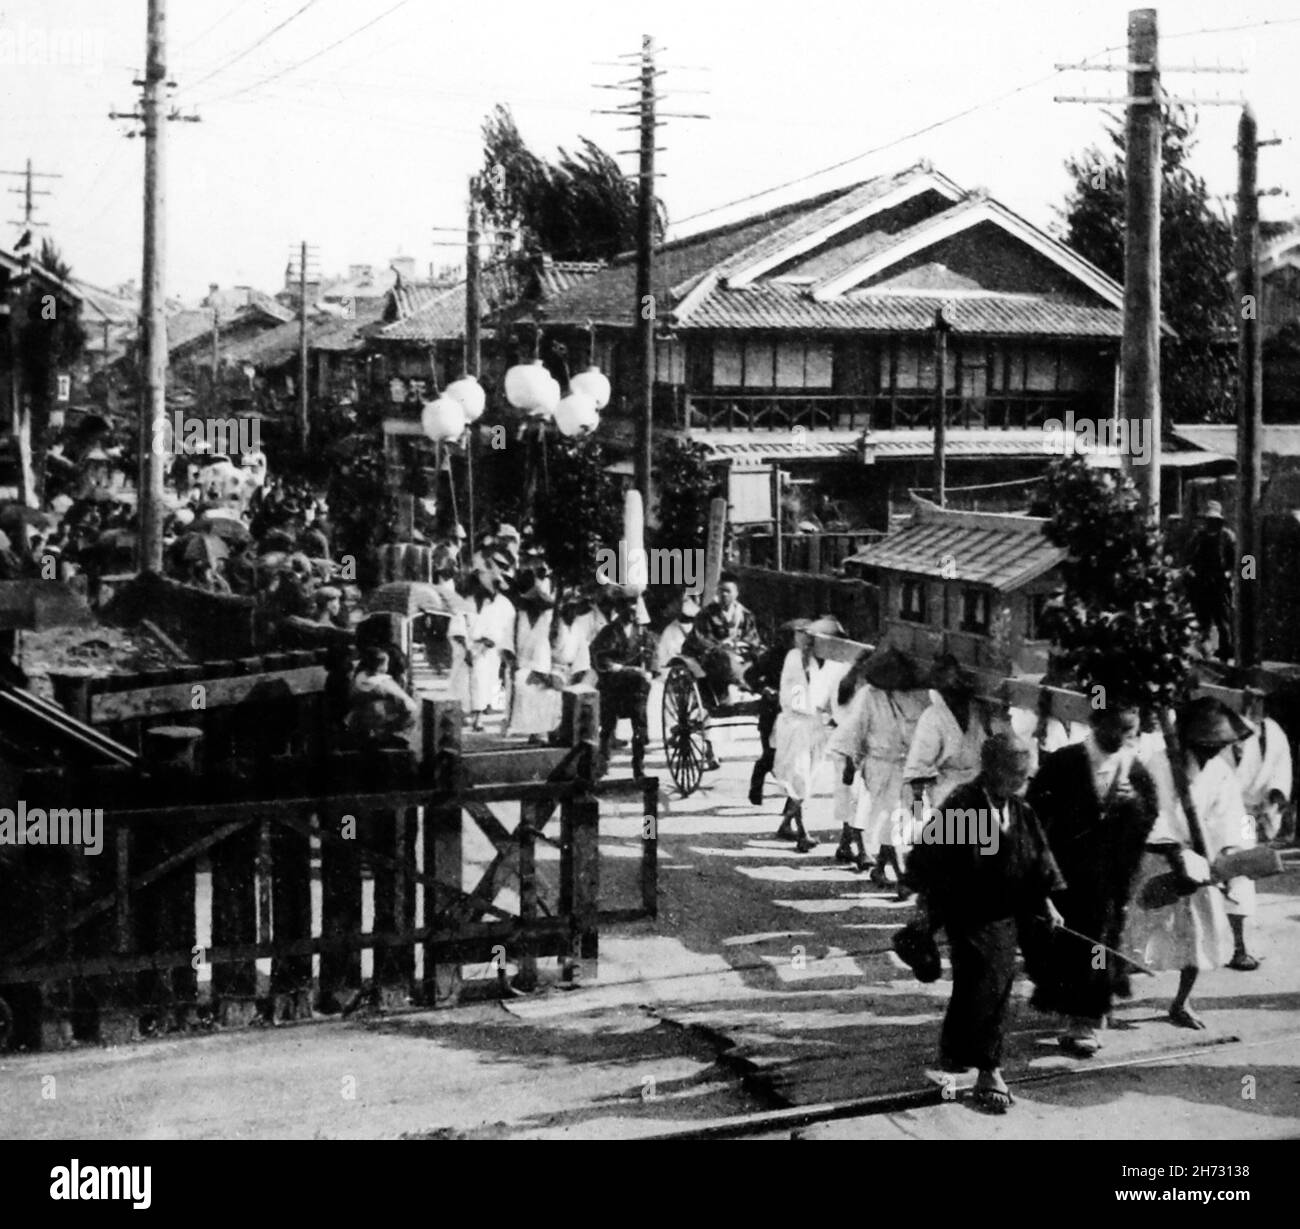 Trauerzug, Japan, Anfang 1900s Stockfoto